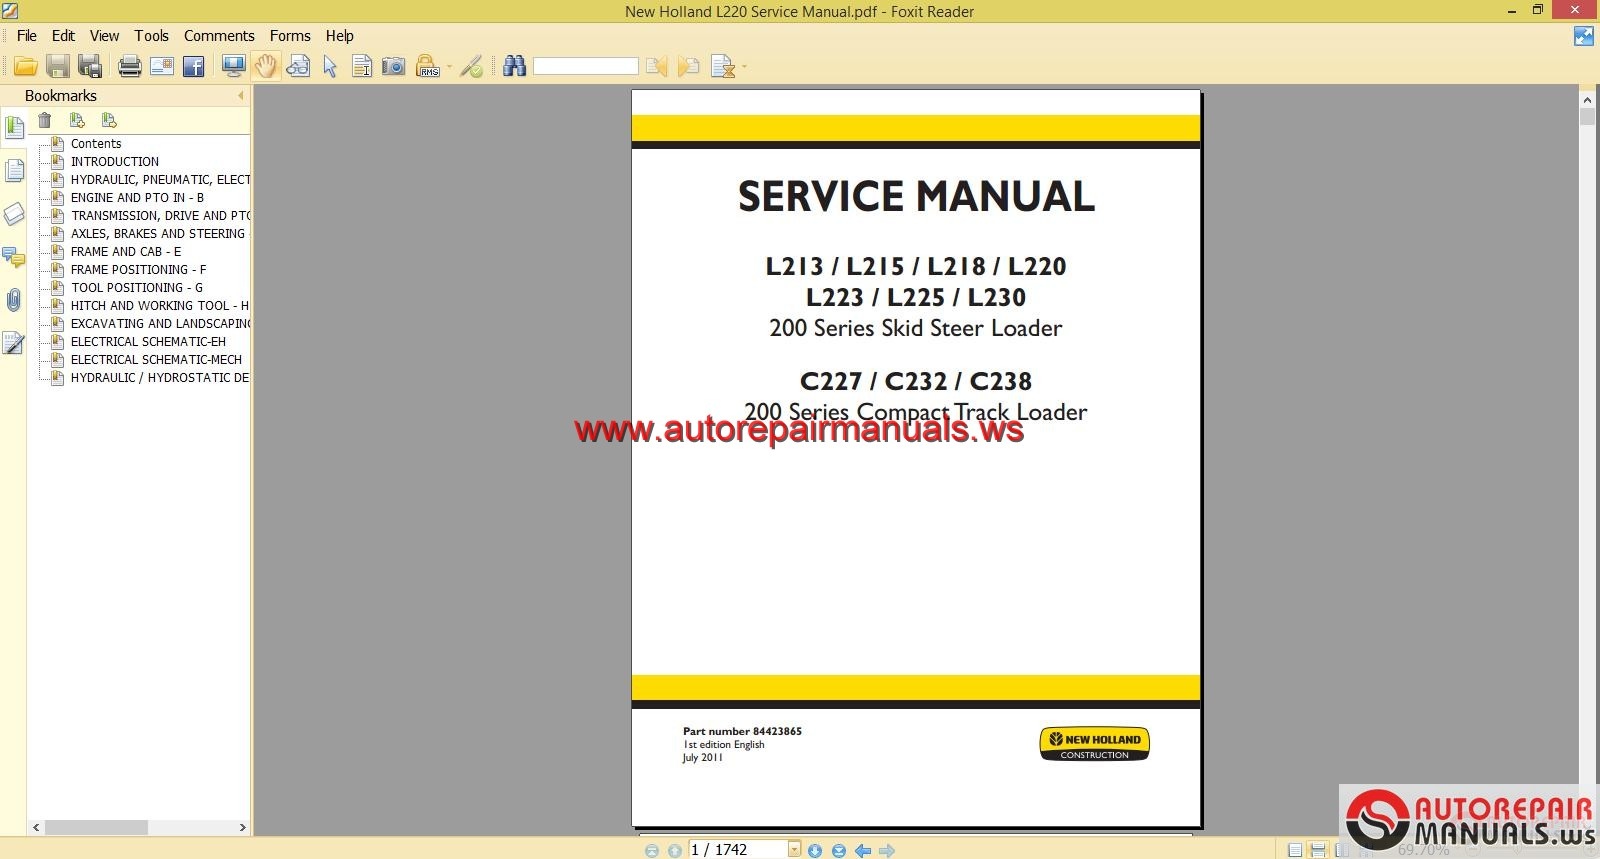 New Holland L220 Service Manual | Auto Repair Manual Forum ...